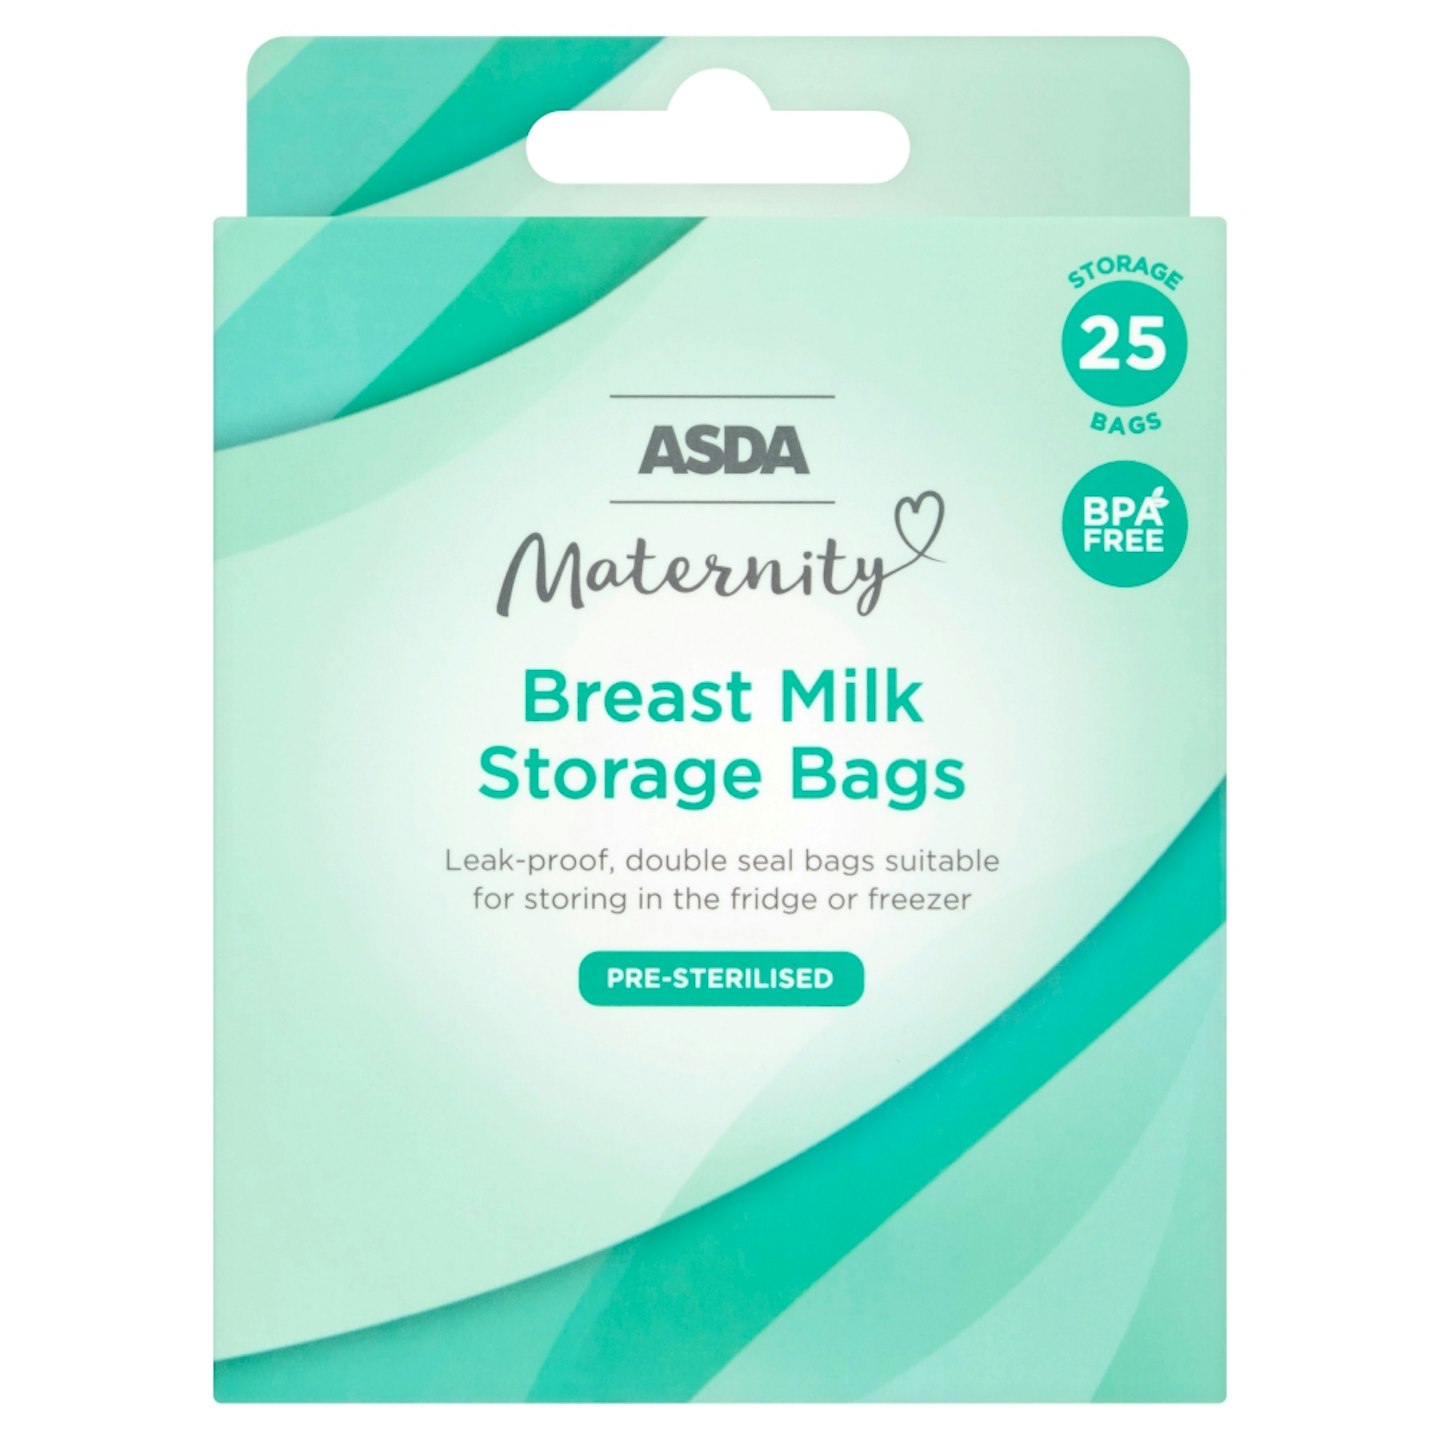 https://images.bauerhosting.com/affiliates/sites/12/motherandbaby/legacy/root/asda-maternity-25-breast-milk-storage-bags.jpg?ar=16%3A9&fit=crop&crop=top&auto=format&w=1440&q=80